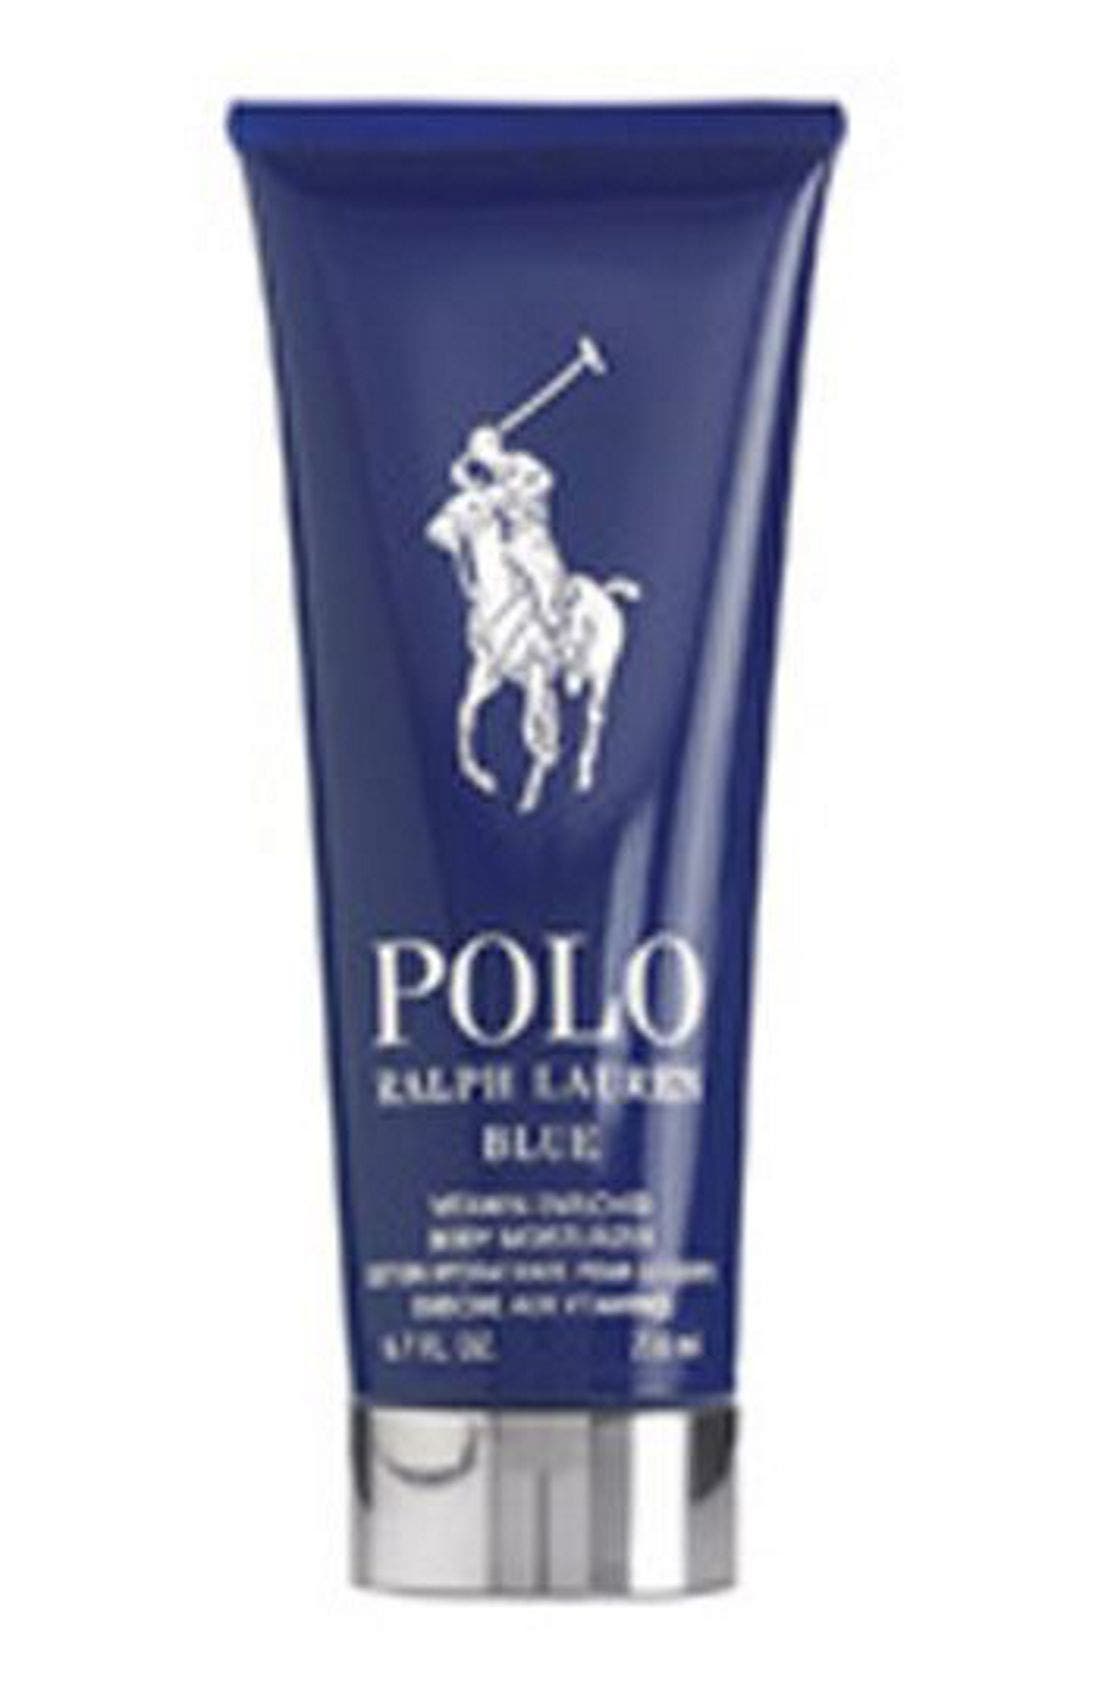 polo blue lotion